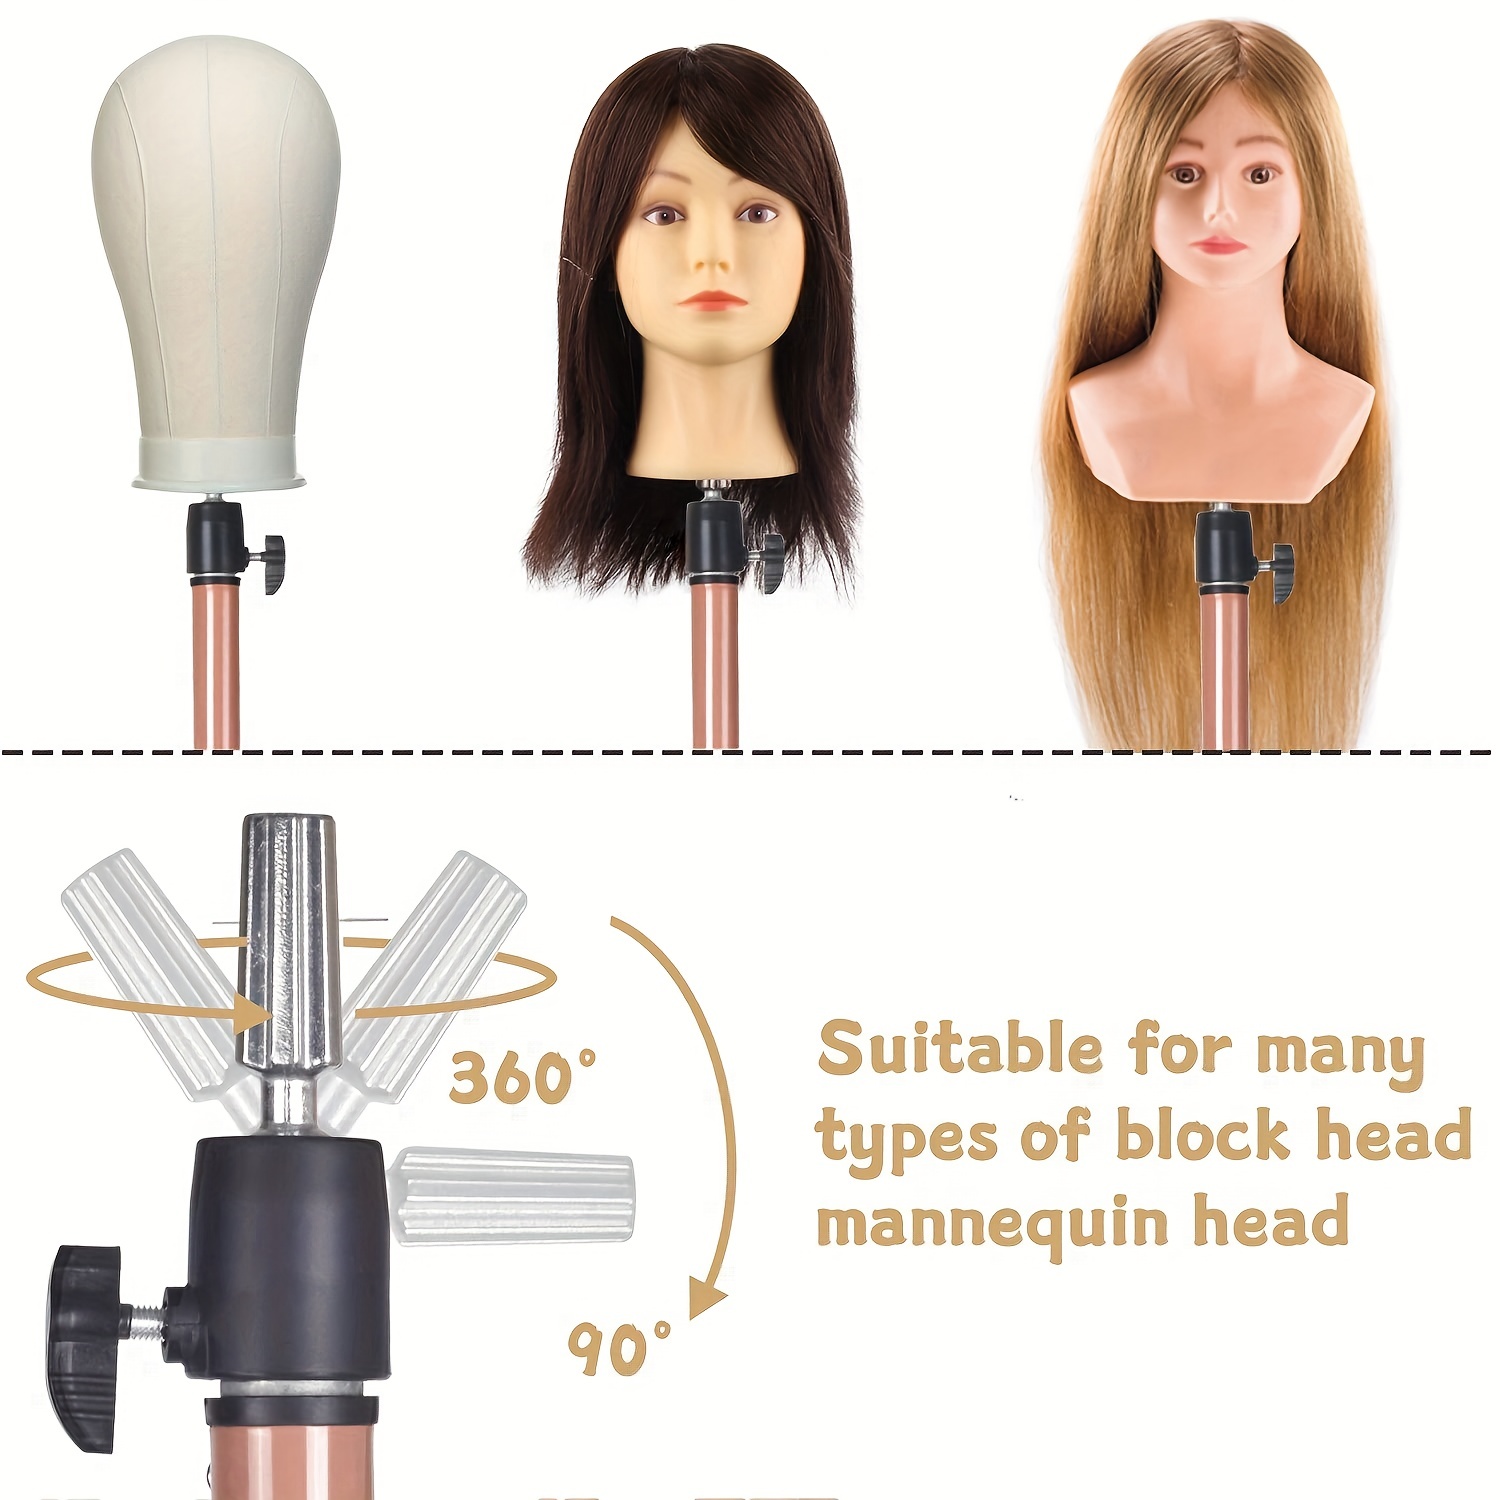 Training Mannequin Head Canvas Block Head Display - Adjustable